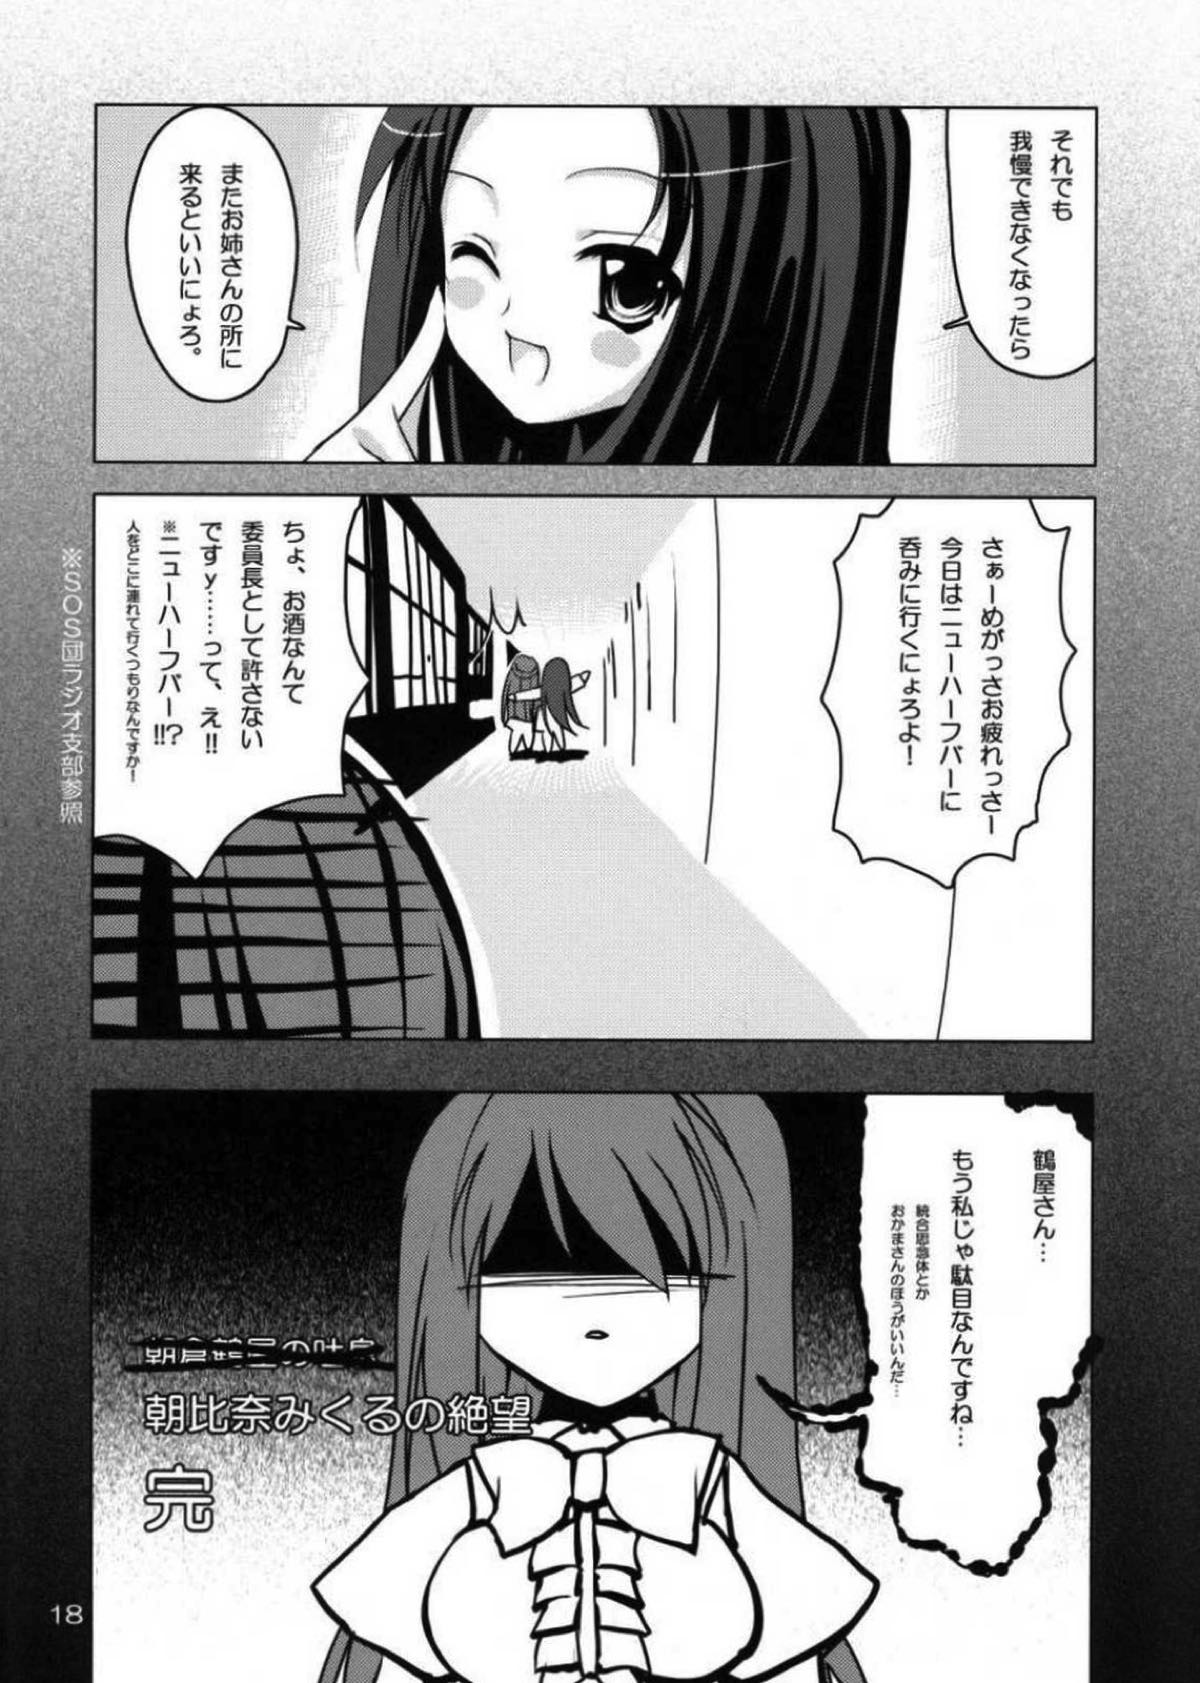 mayuge izm 朝倉鶴屋の吐息 16ページ